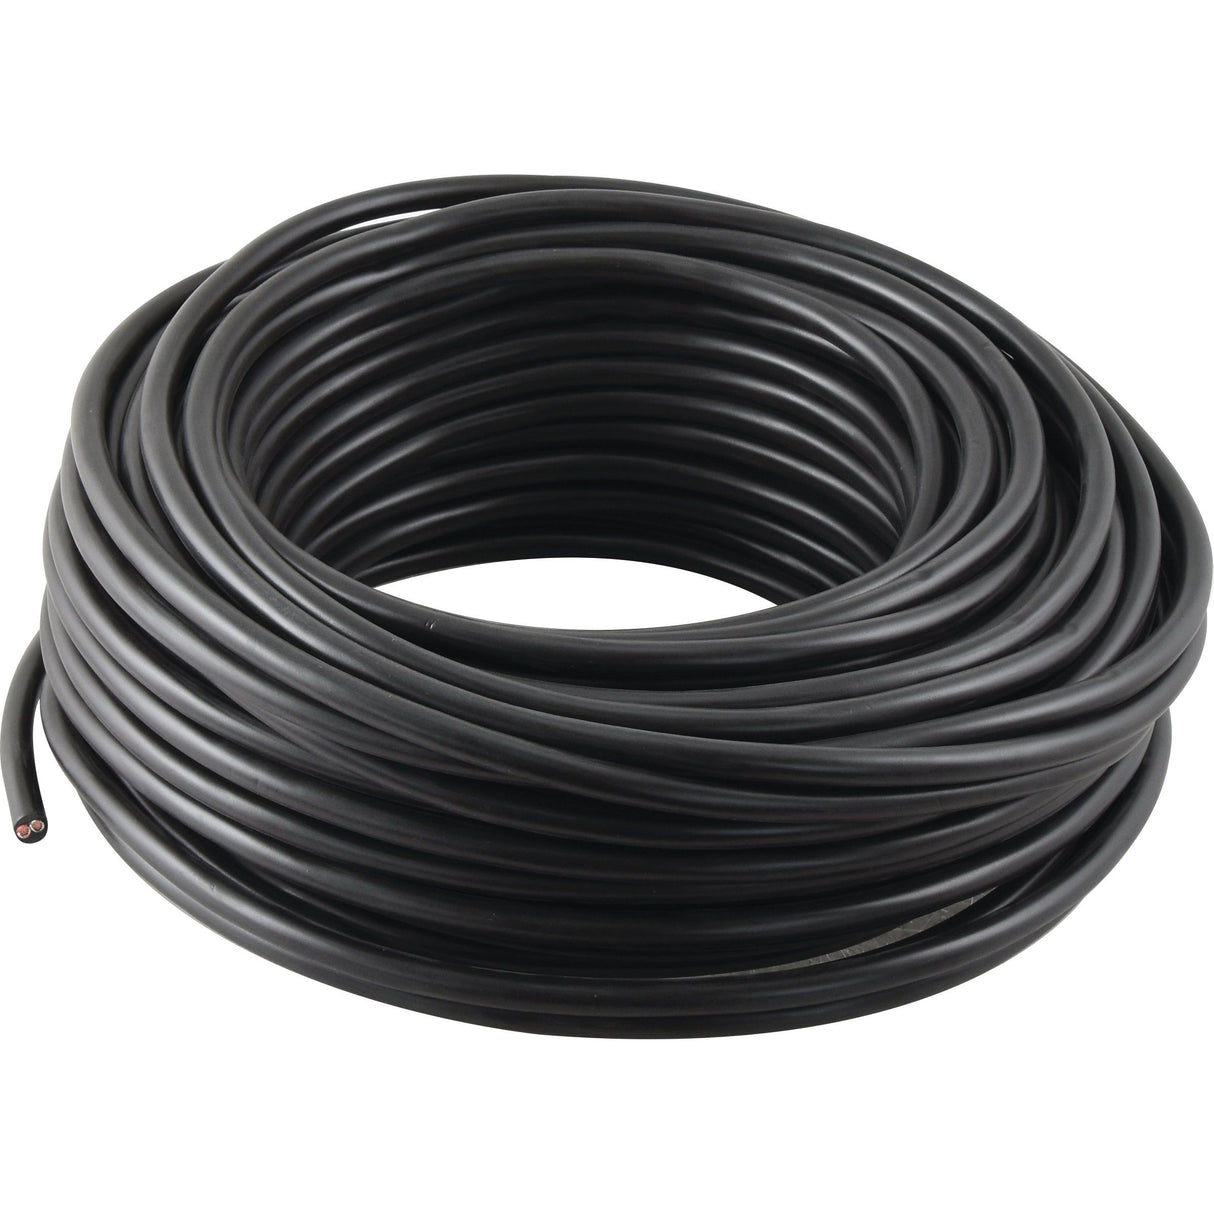 Electrical Cable - 2 Core, 4mm² Cable, Black (Length: 50M), ()
 - S.26970 - Farming Parts